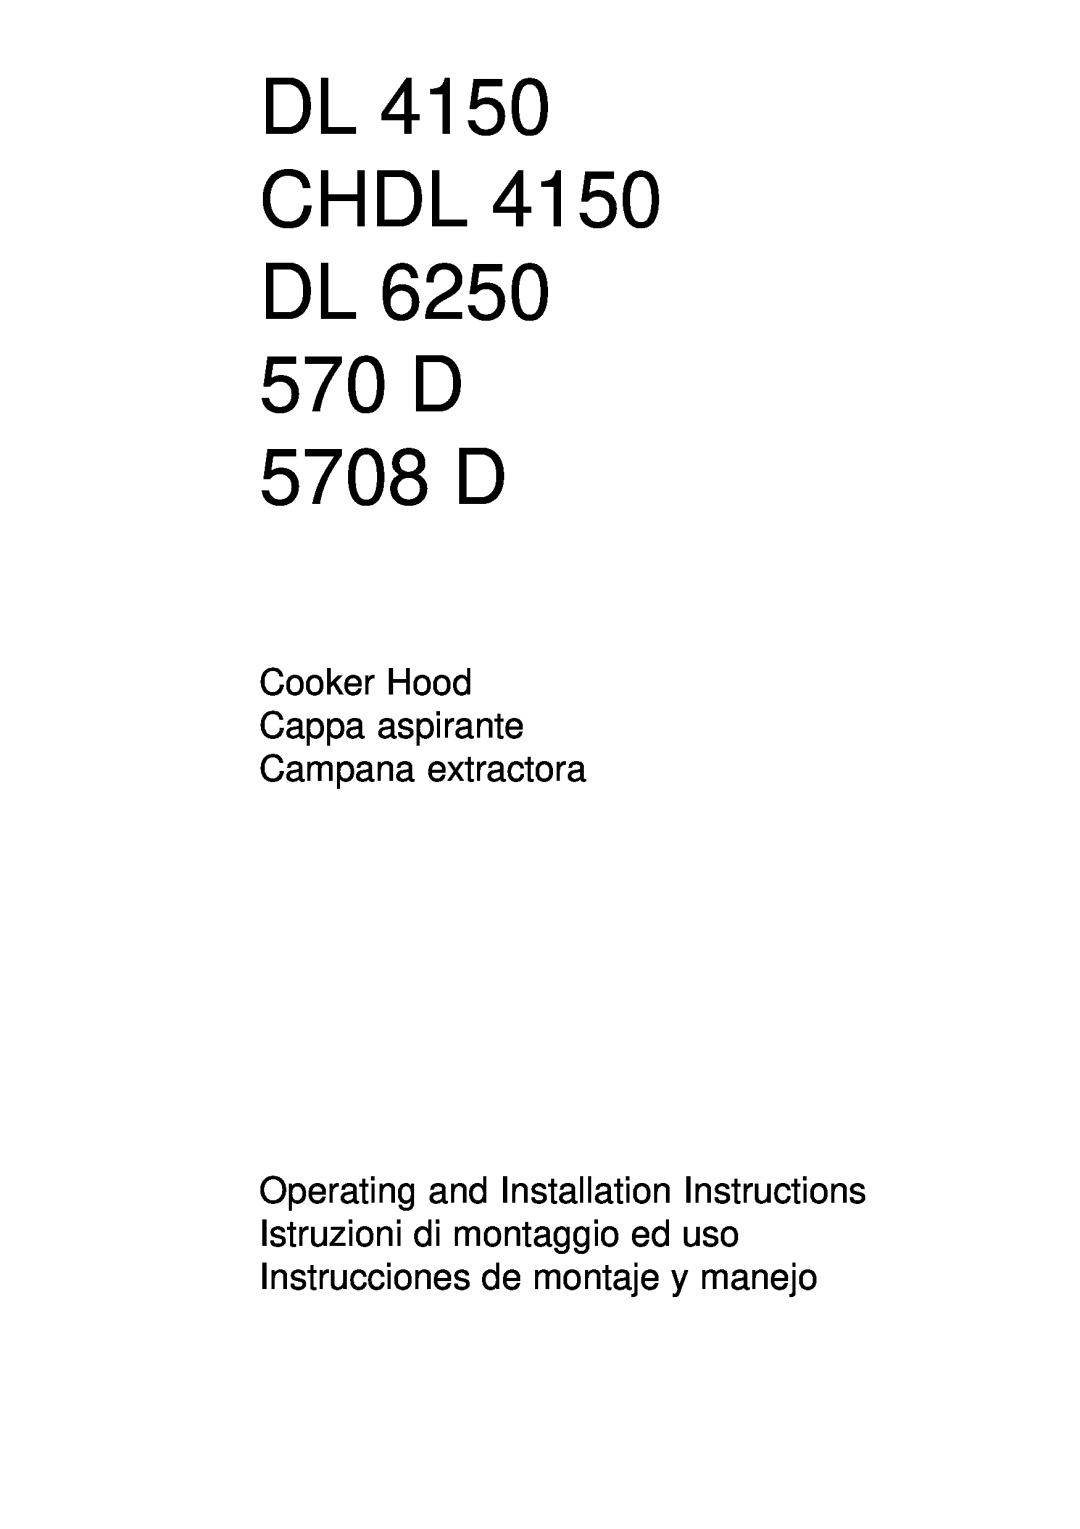 Electrolux installation instructions DL 4150 CHDL 4150 DL 570 D 5708 D, Cooker Hood Cappa aspirante Campana extractora 